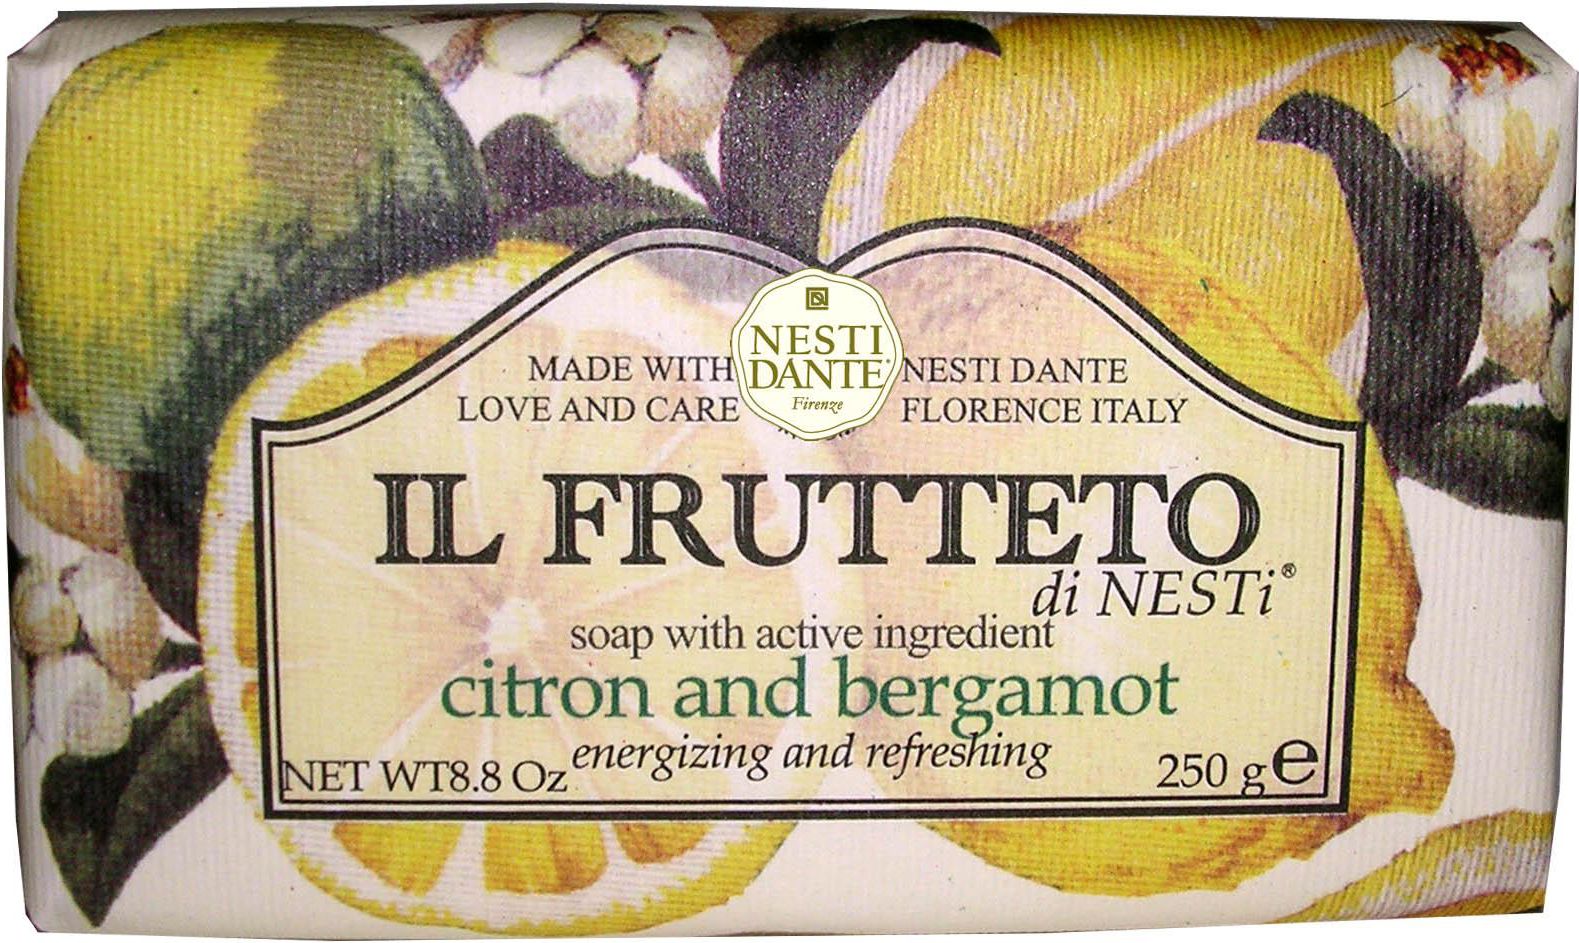 Nesti Dante Il Frutteto Citron And Bergamot mydlo toaletowe 250g 837524000021 (837524000021)